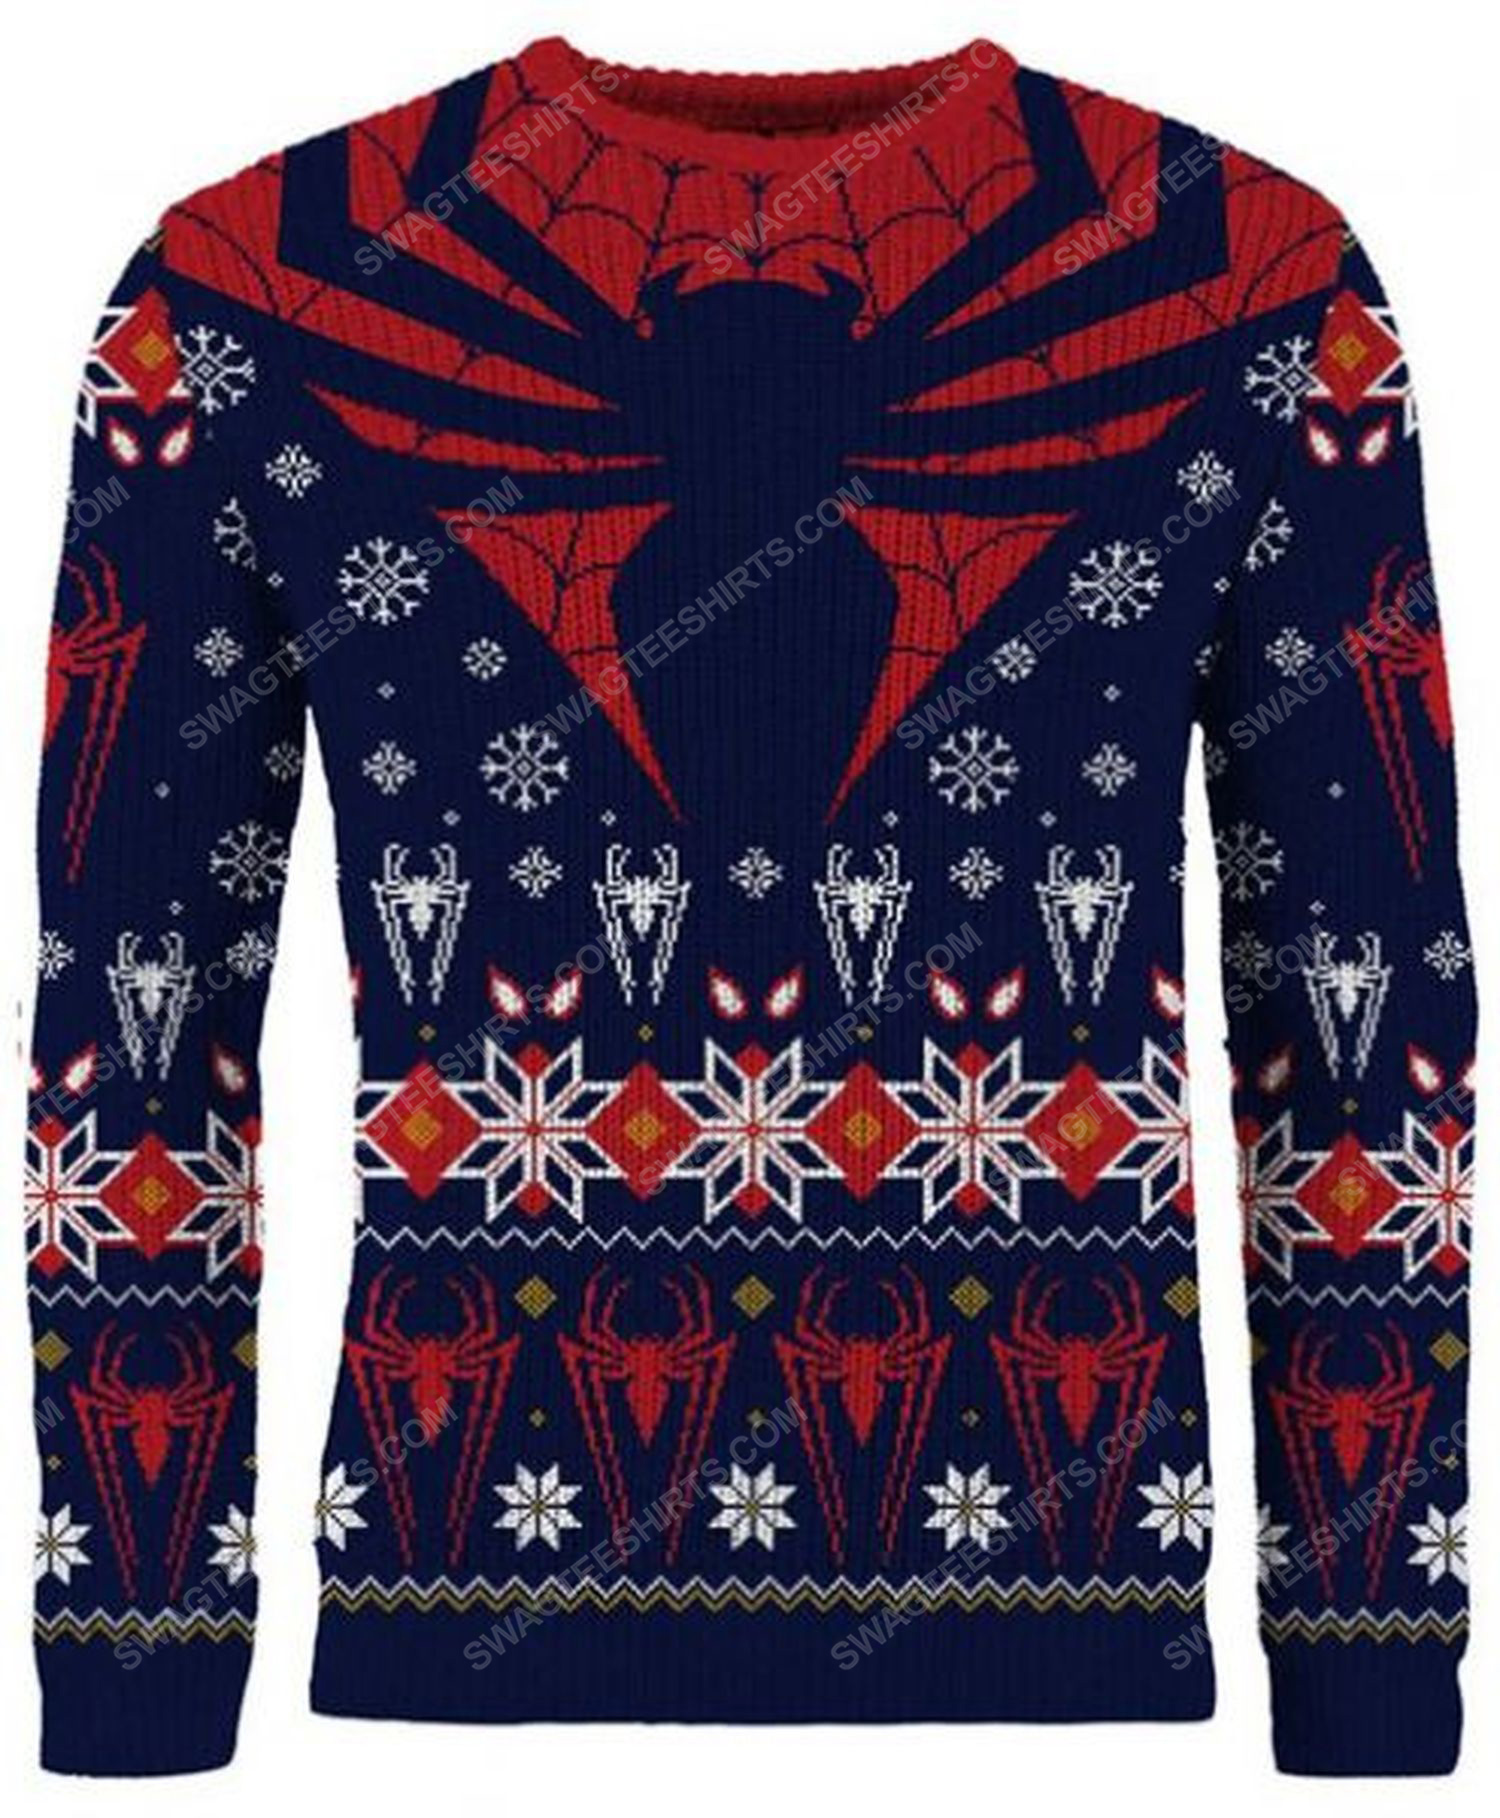 Christmas holiday spider-man full print ugly christmas sweater 1